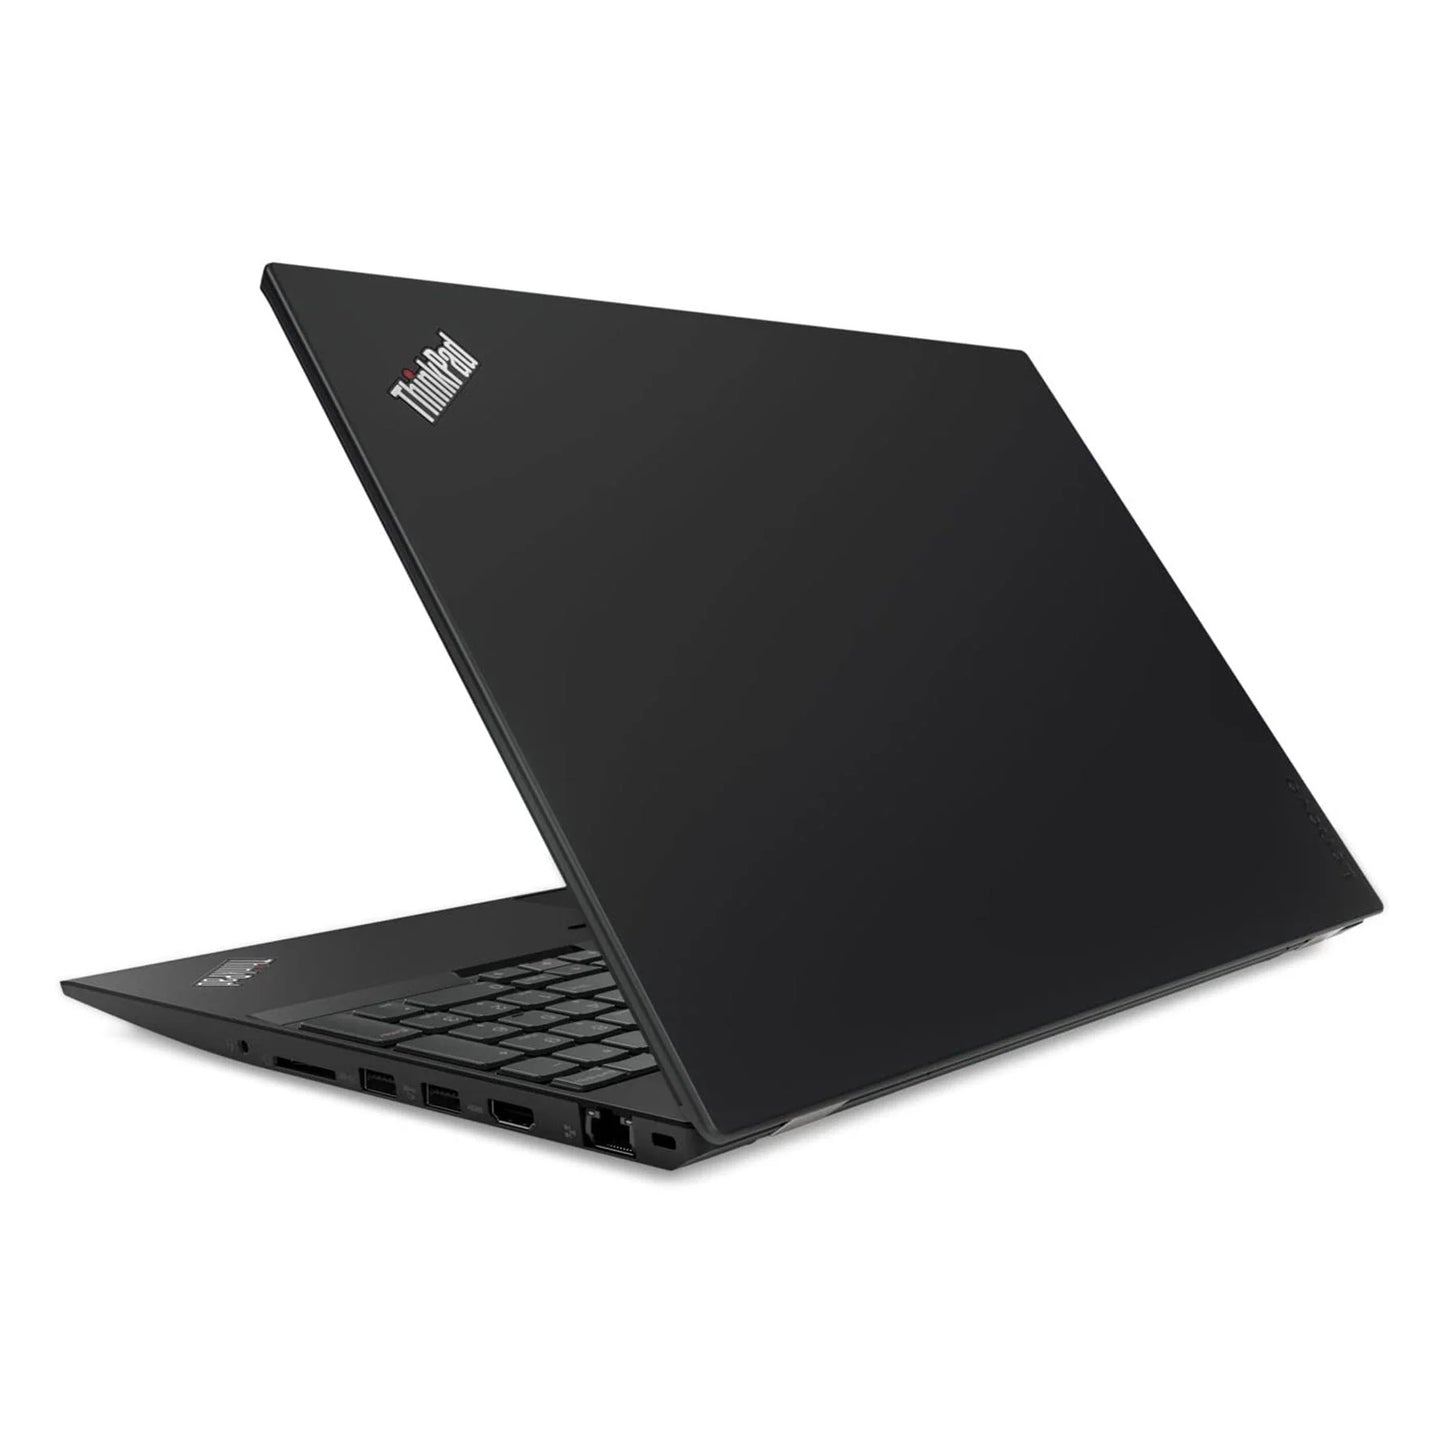 Lenovo ThinkPad T580 Core i5-8350u 15.6" Laptop Offers (Open Box)